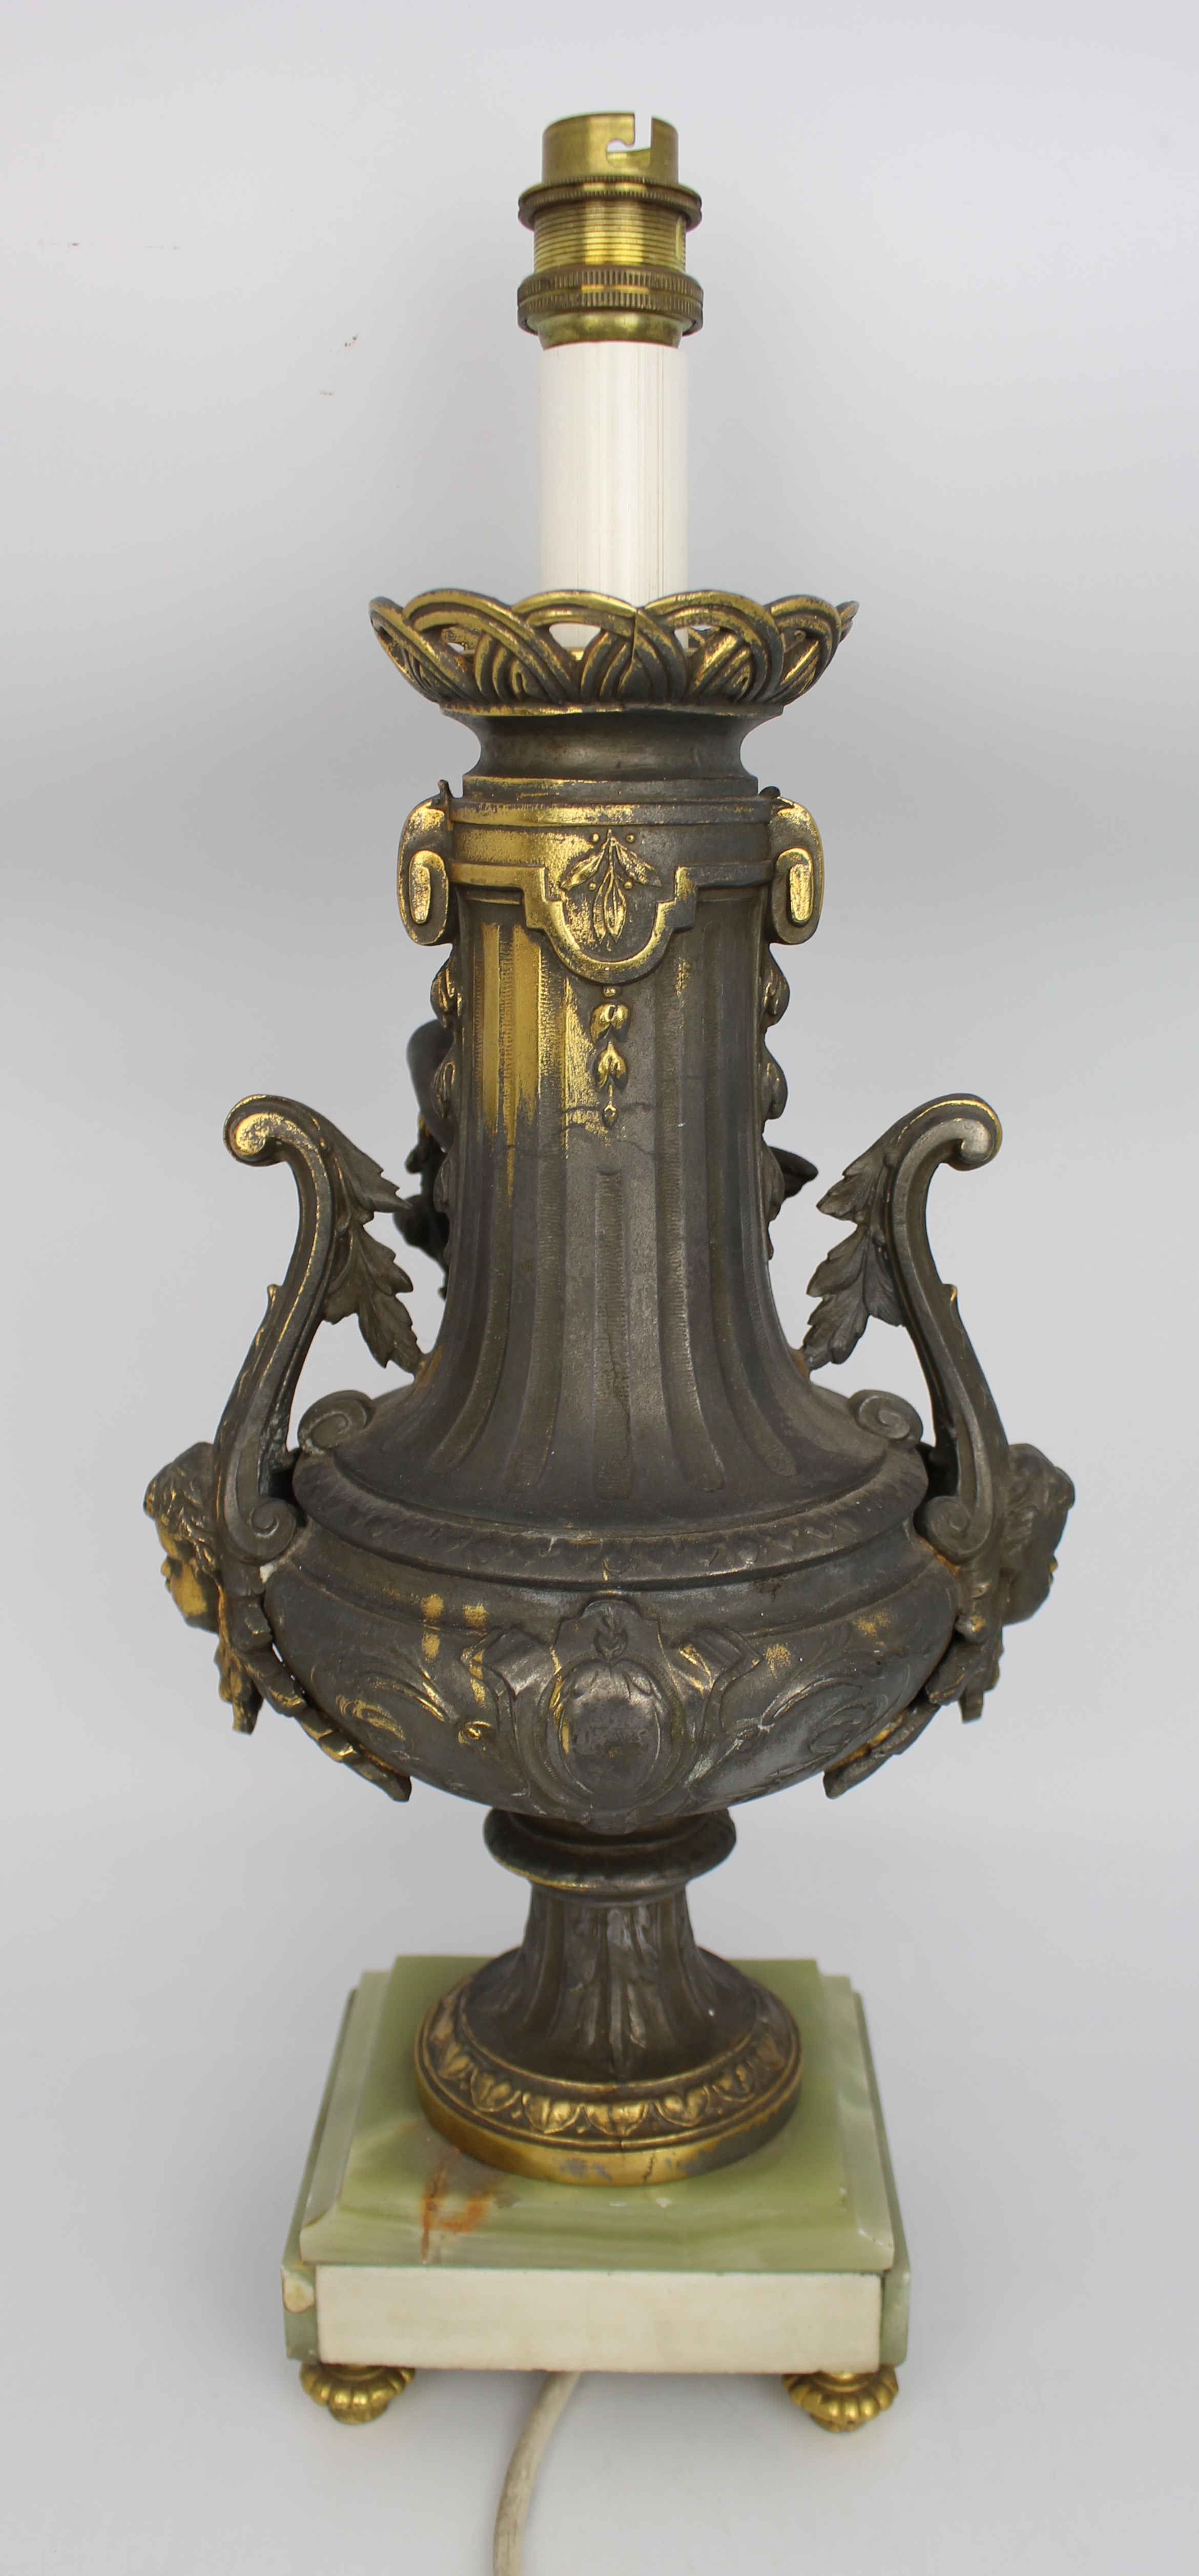 Vintage Brass Cherub Onyx Table Lamp - Image 3 of 3